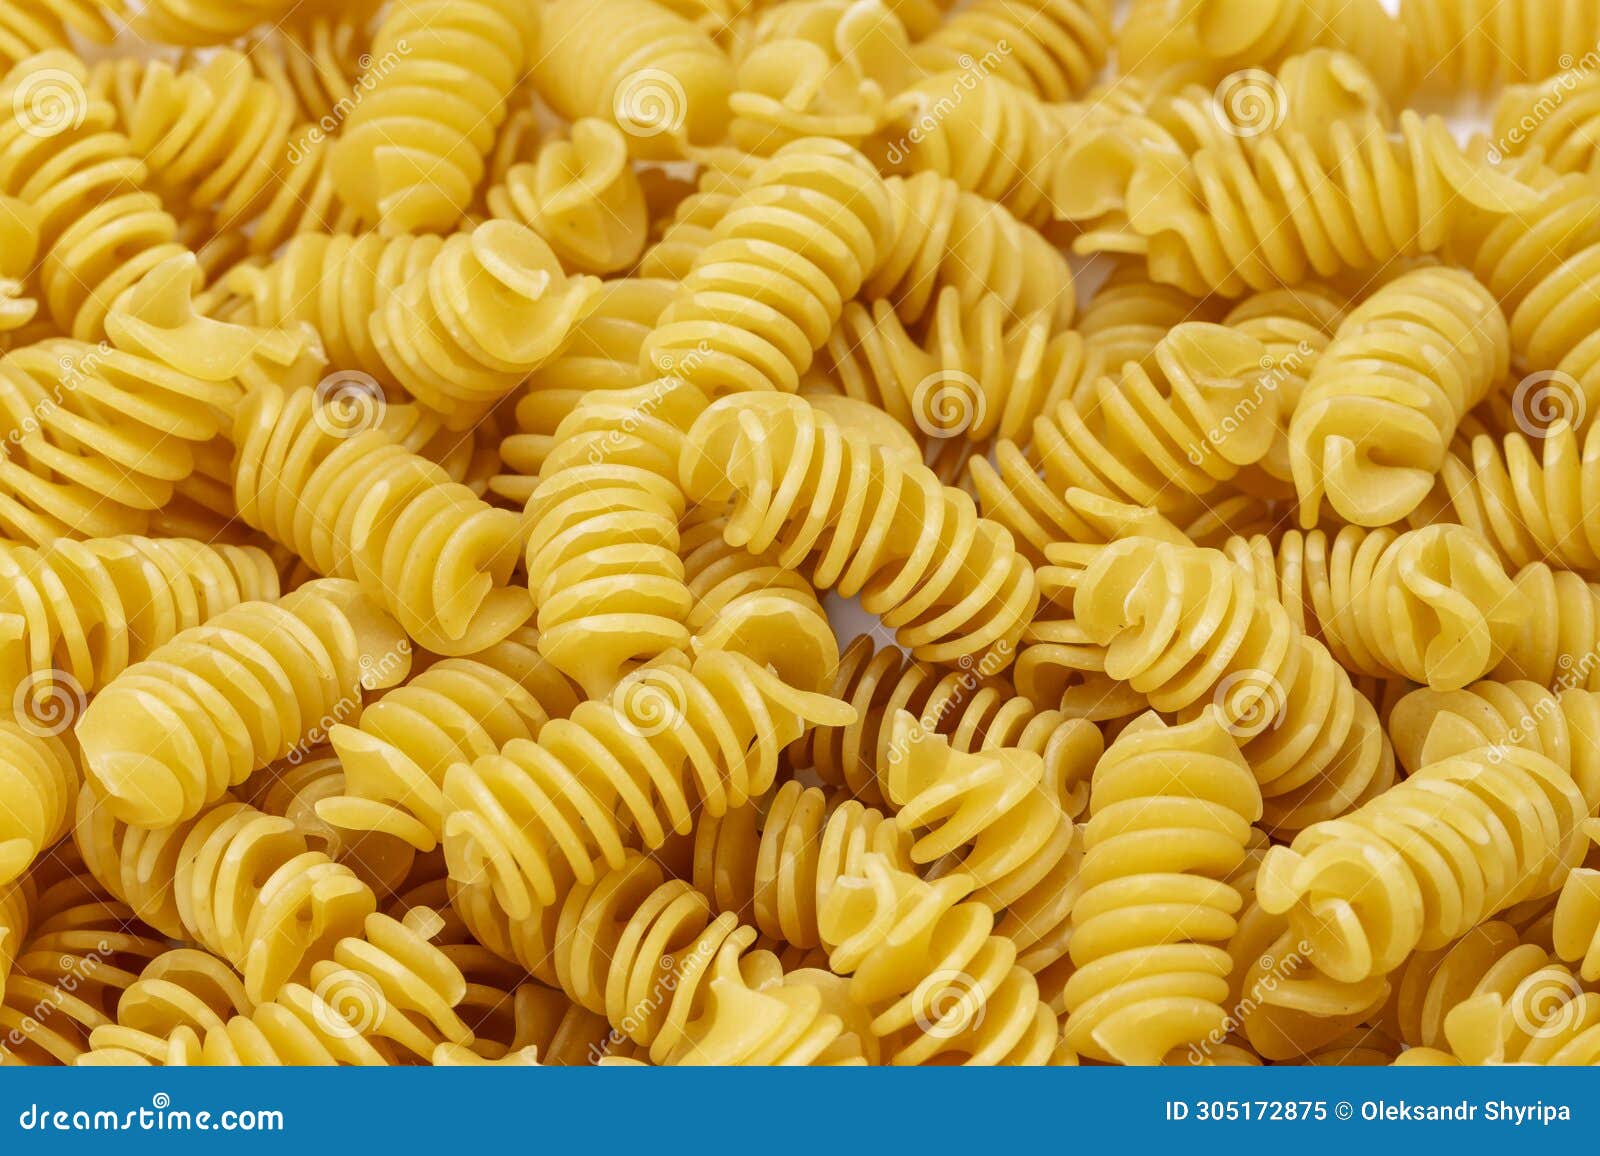 background from pasta. fusilli spirale texture